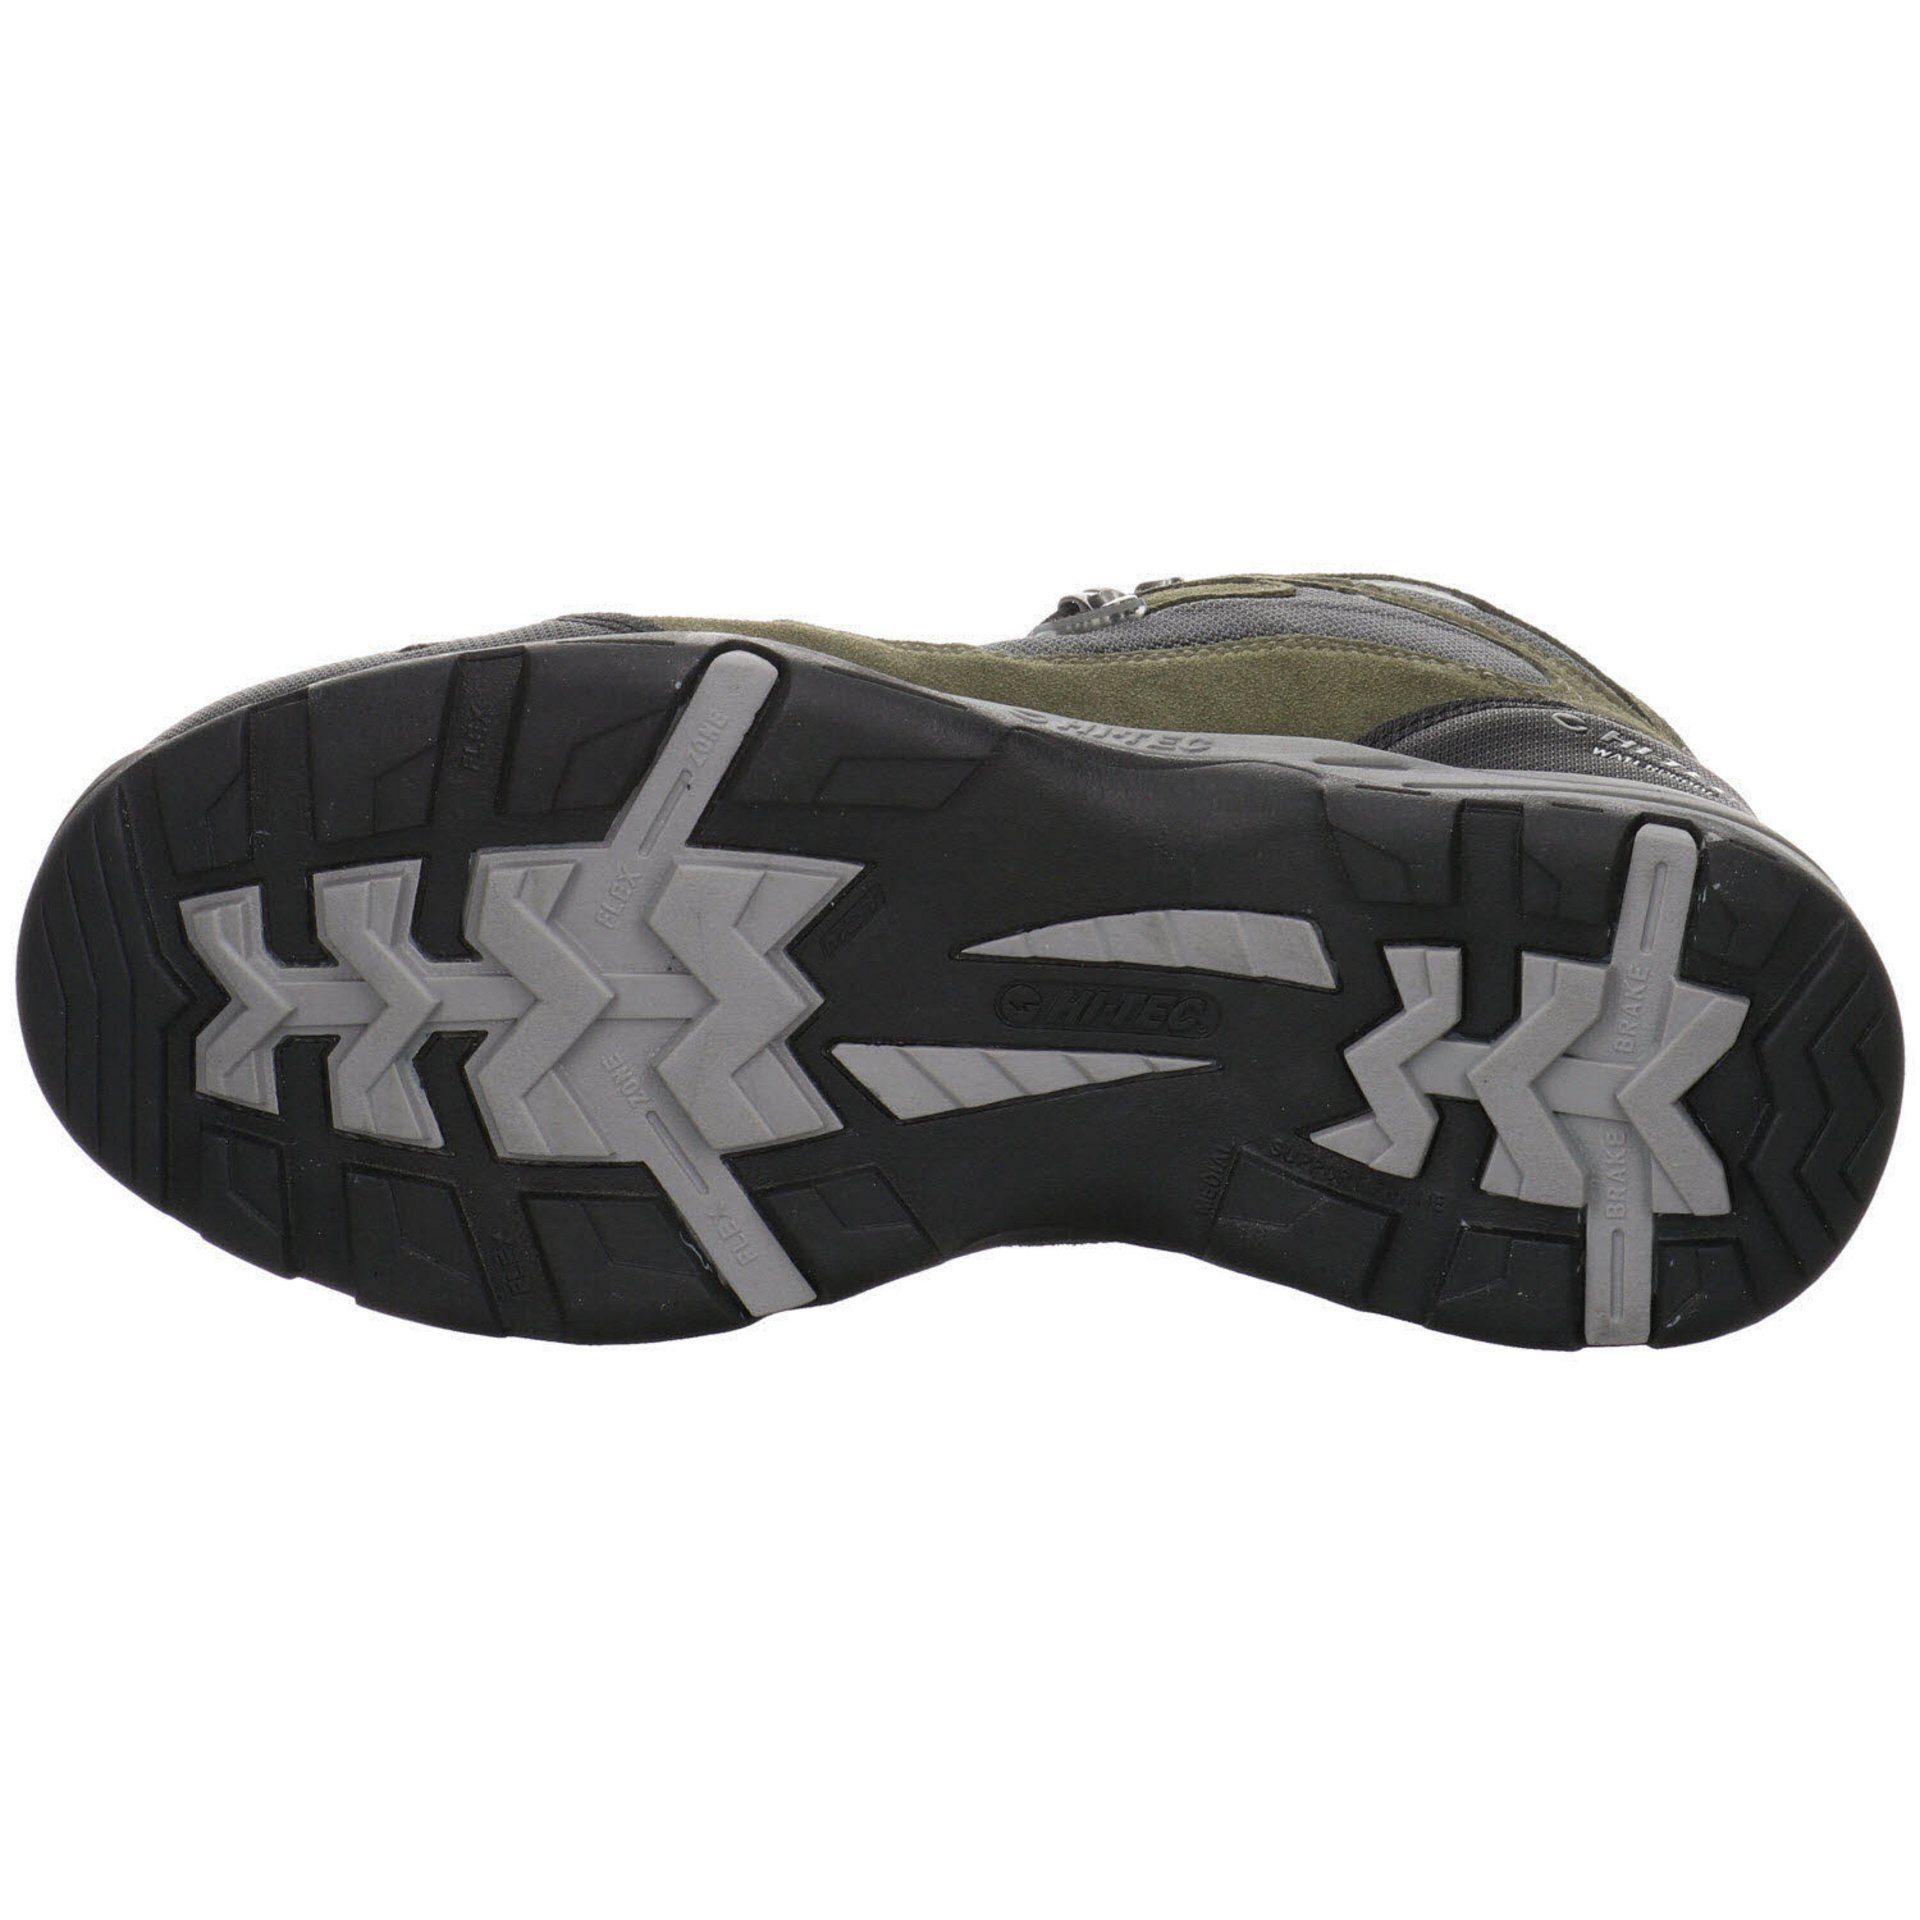 WP Storm Outdoor Schuhe Herren OLIVE Outdoorschuh HI-TEC Leder-/Textilkombination NIGHT/GREY/BL Hi-Tec work Outdoorschuh